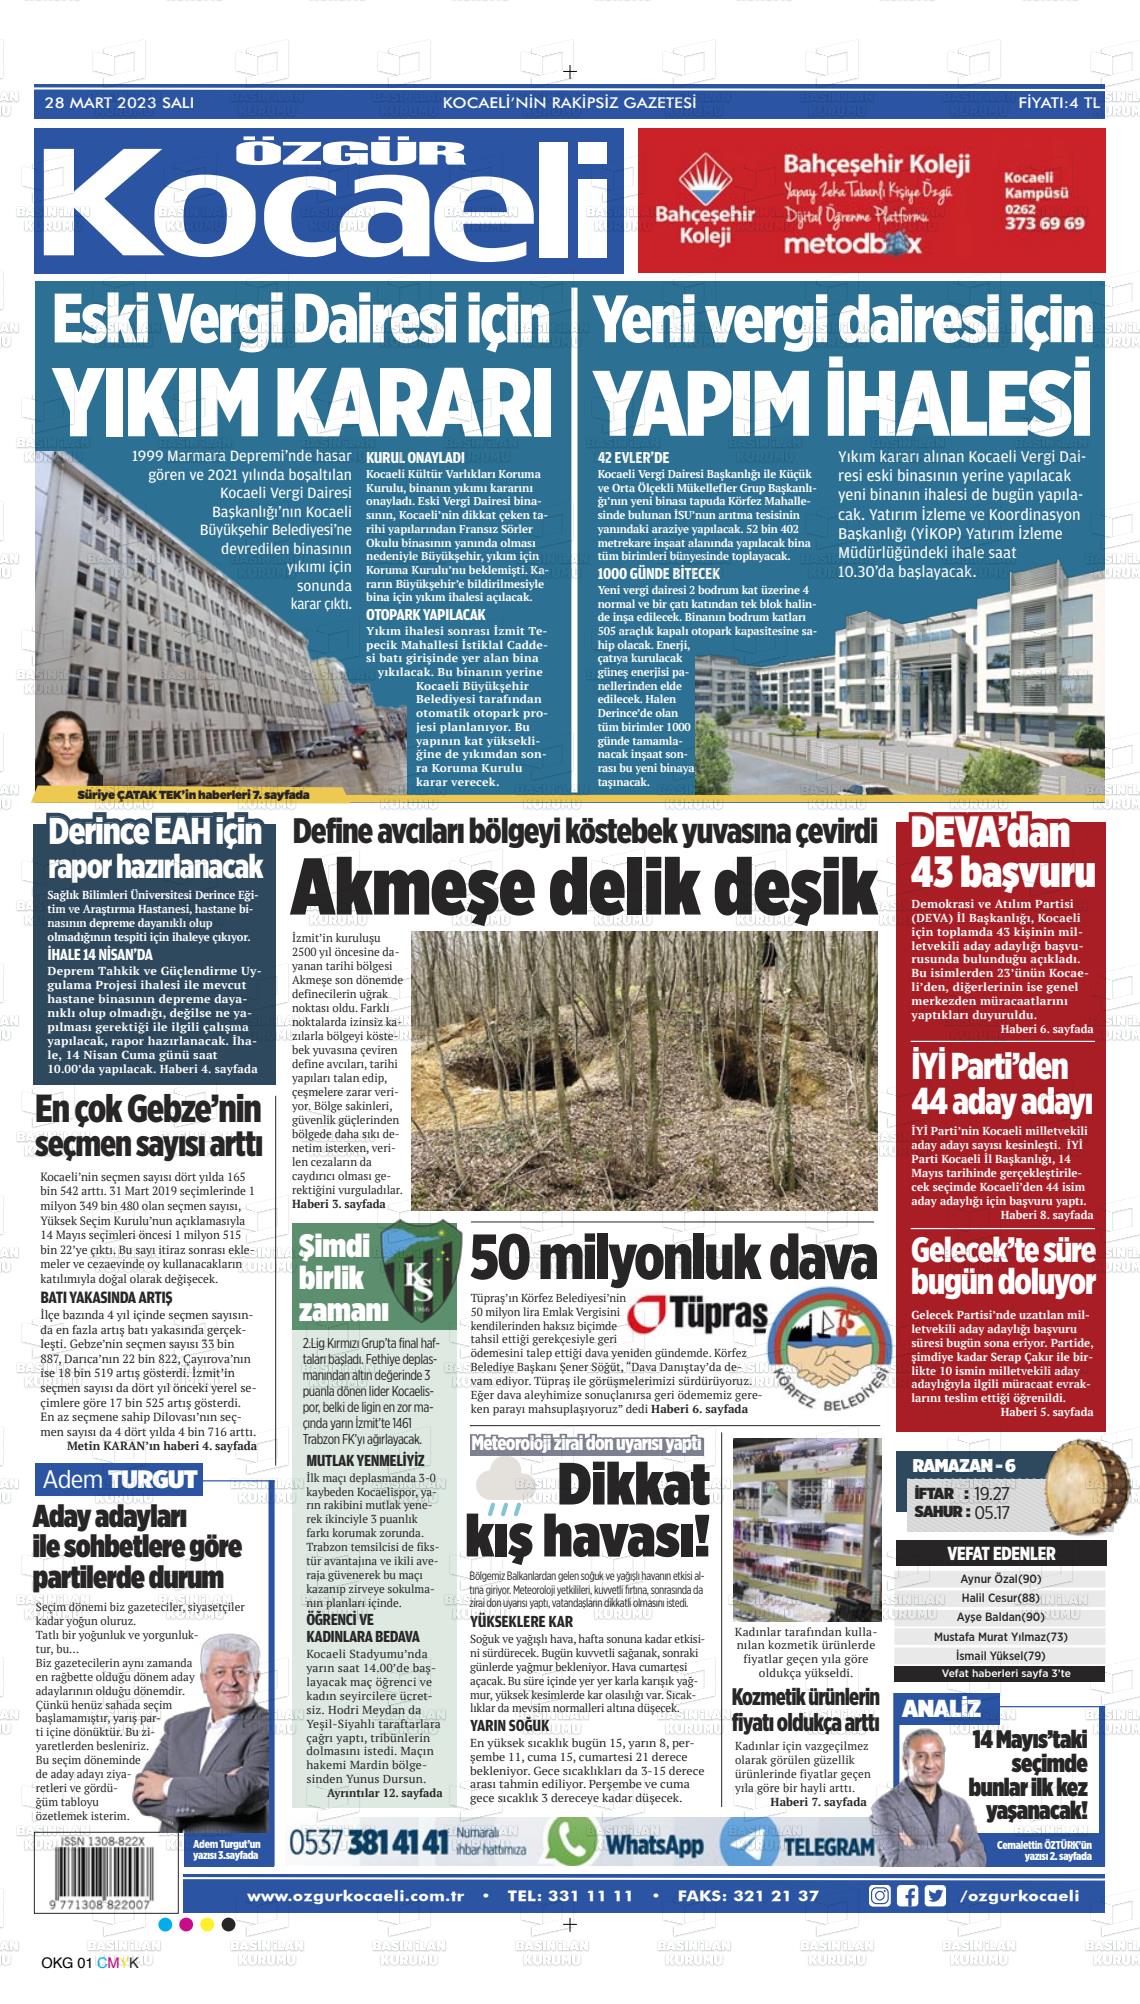 28 Mart 2023 Özgür Kocaeli Gazete Manşeti